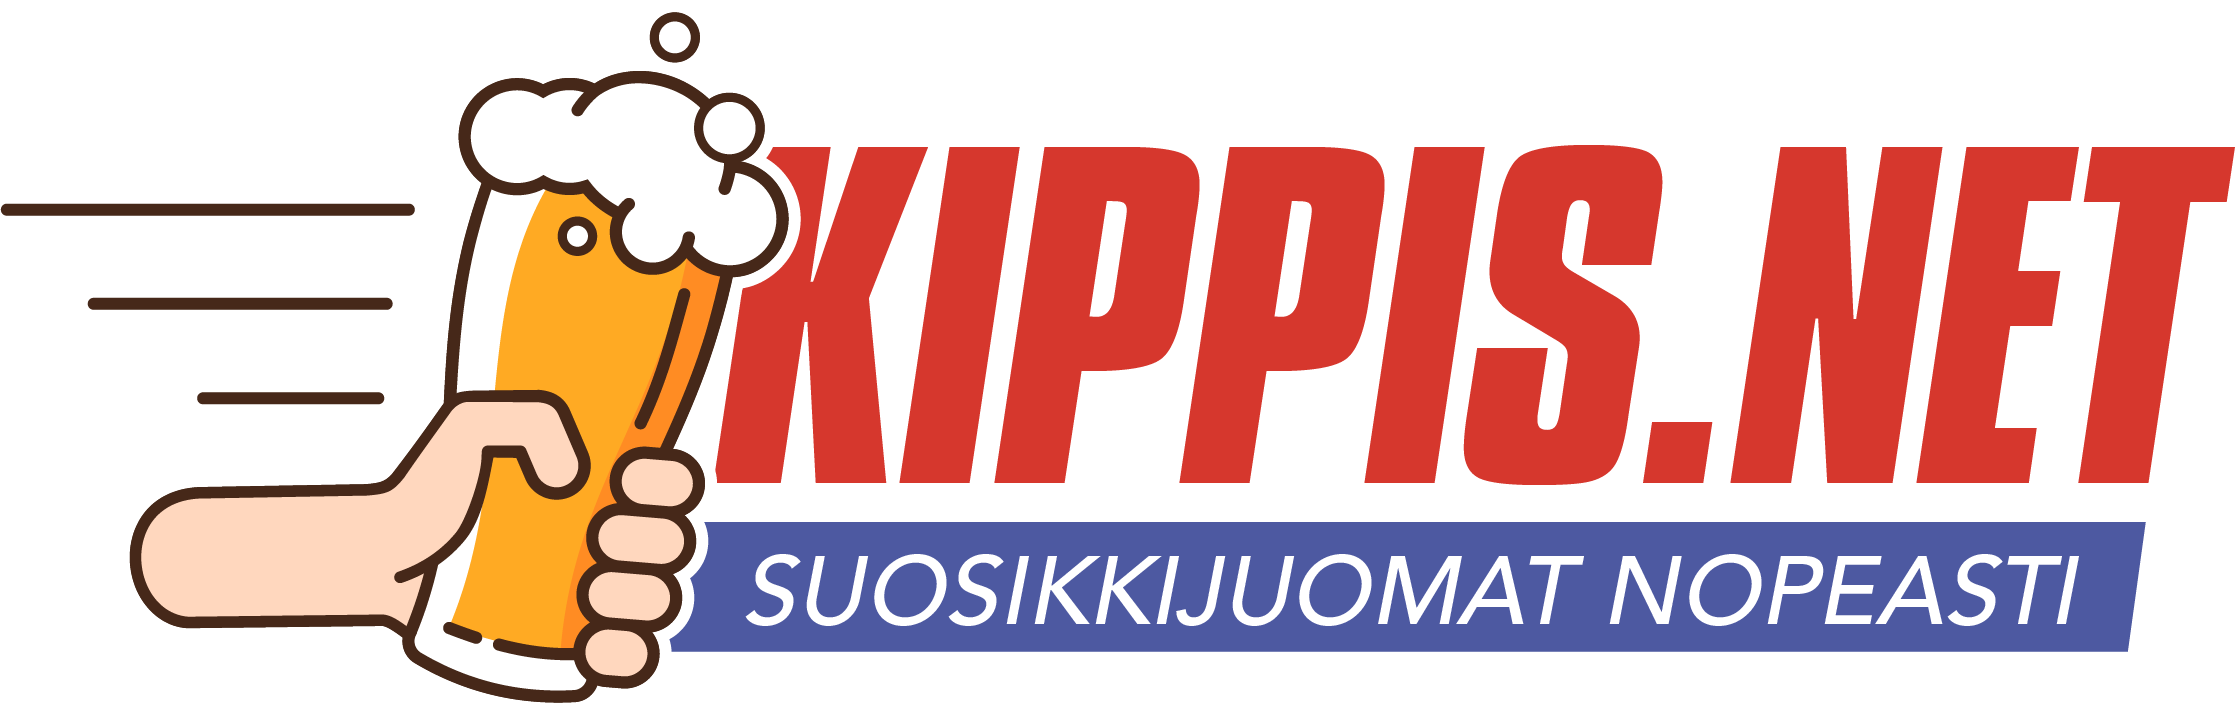 Kippis.net